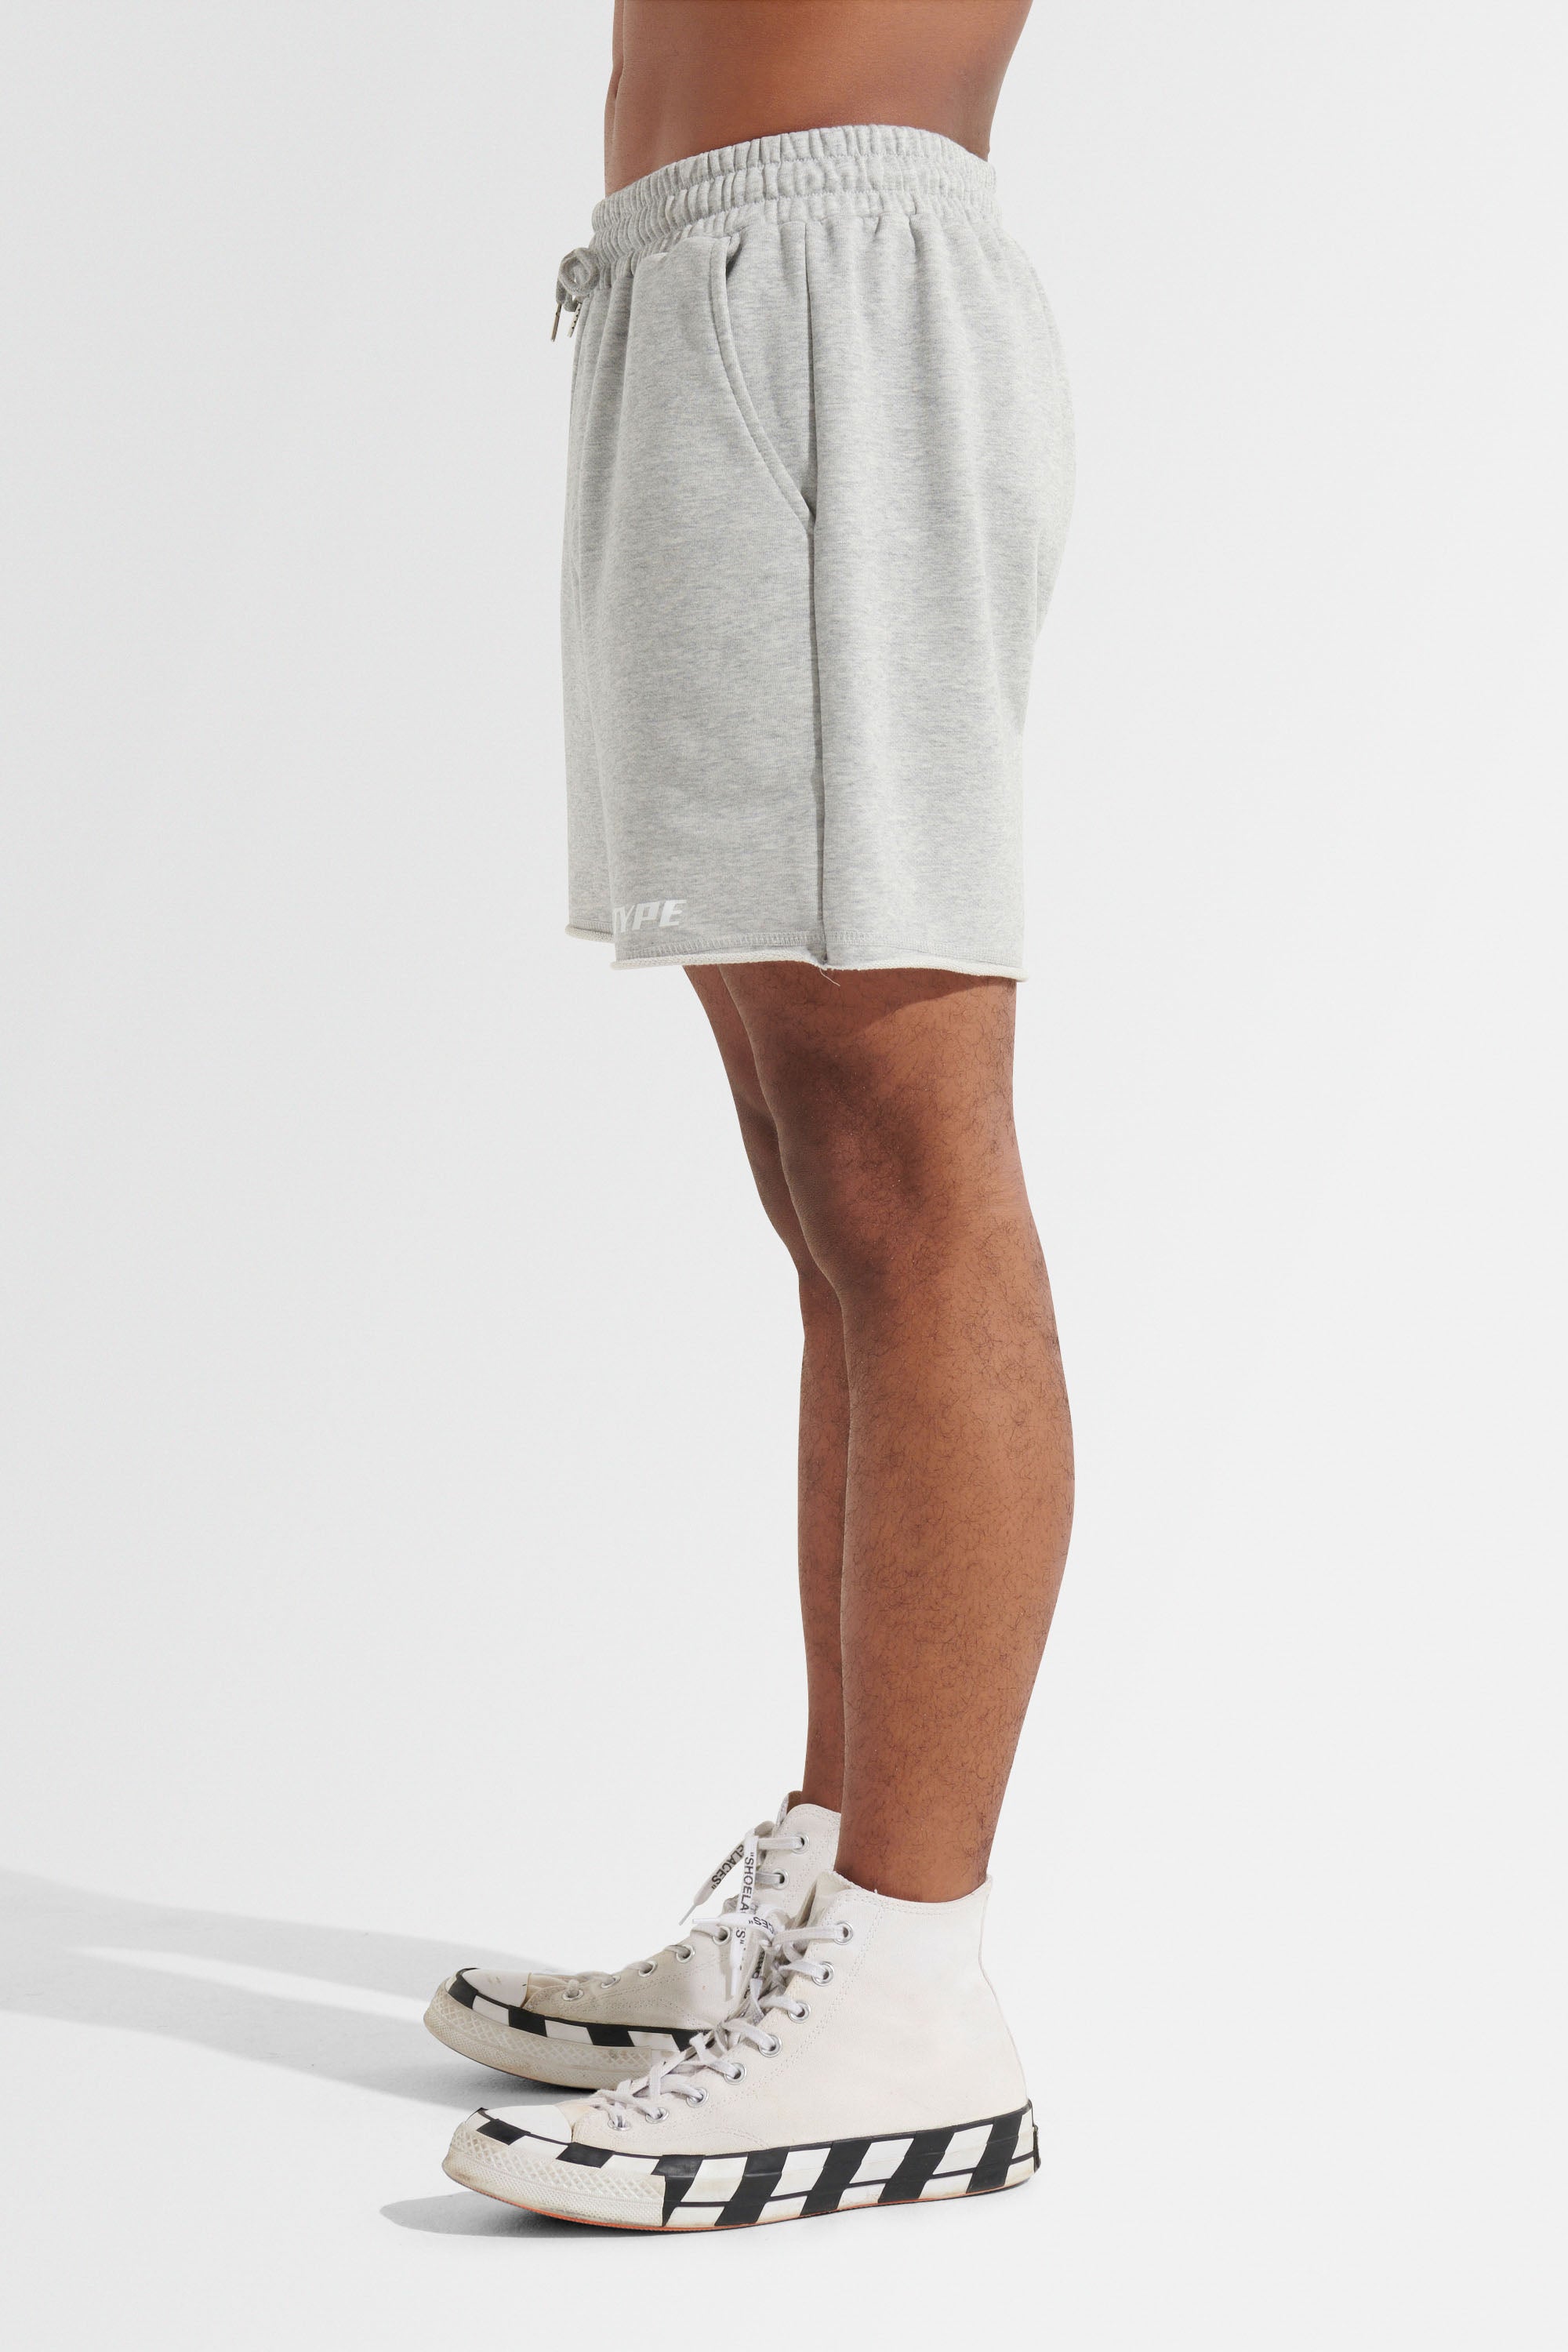 NEWTYPE Shorts Royal Shorts - Grey